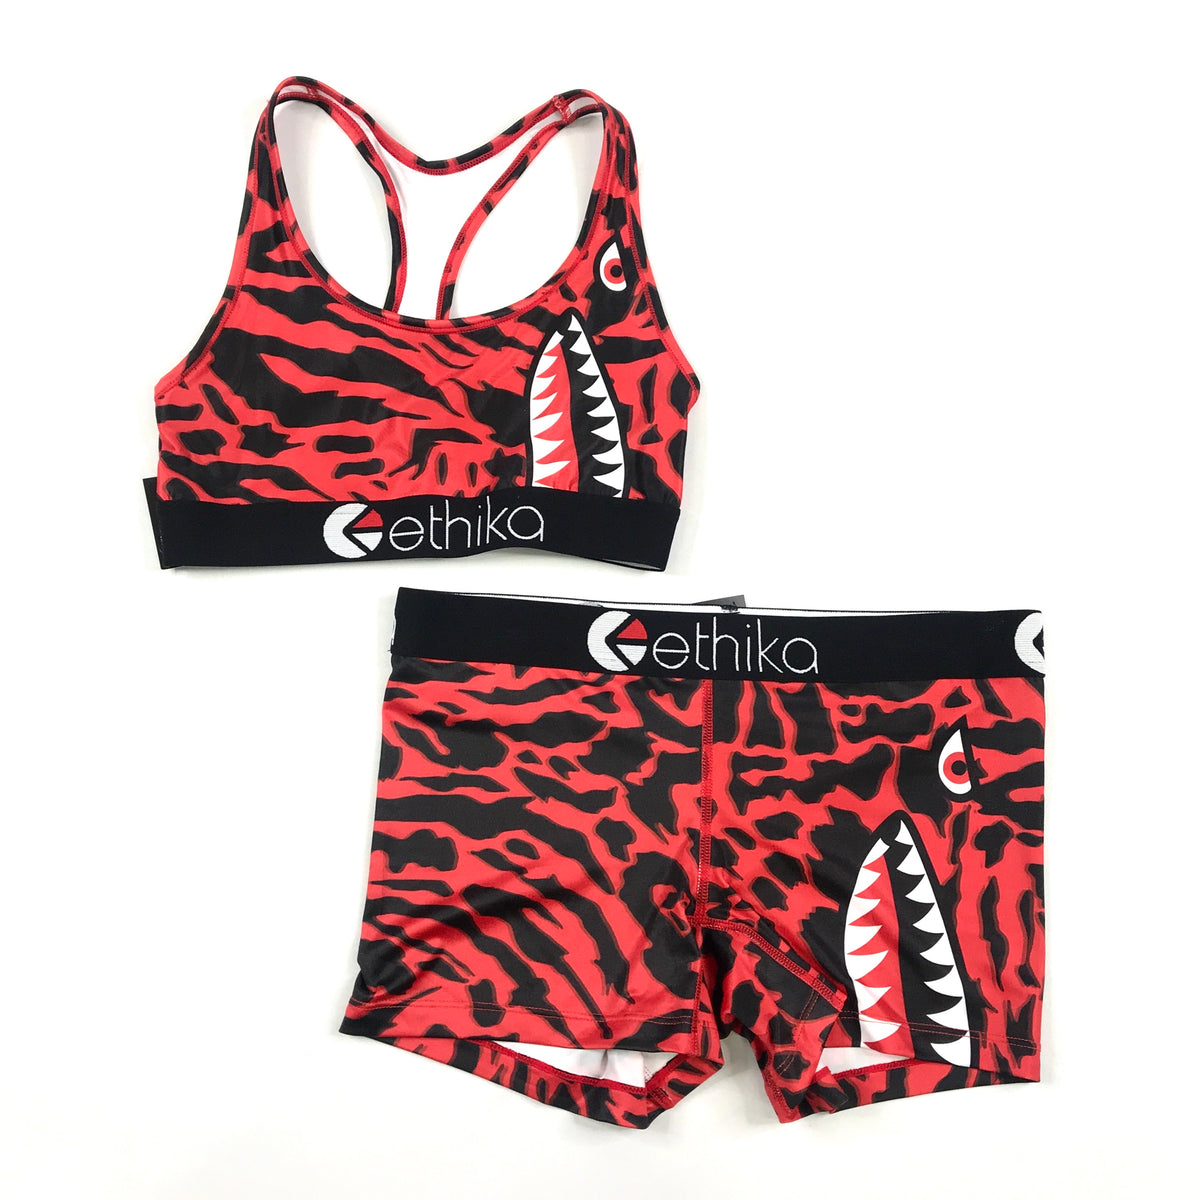 Ethika Staple boxer brief and sports bra set in Bomber Slyme (wlsb1305 –  R.O.K. Island Clothing